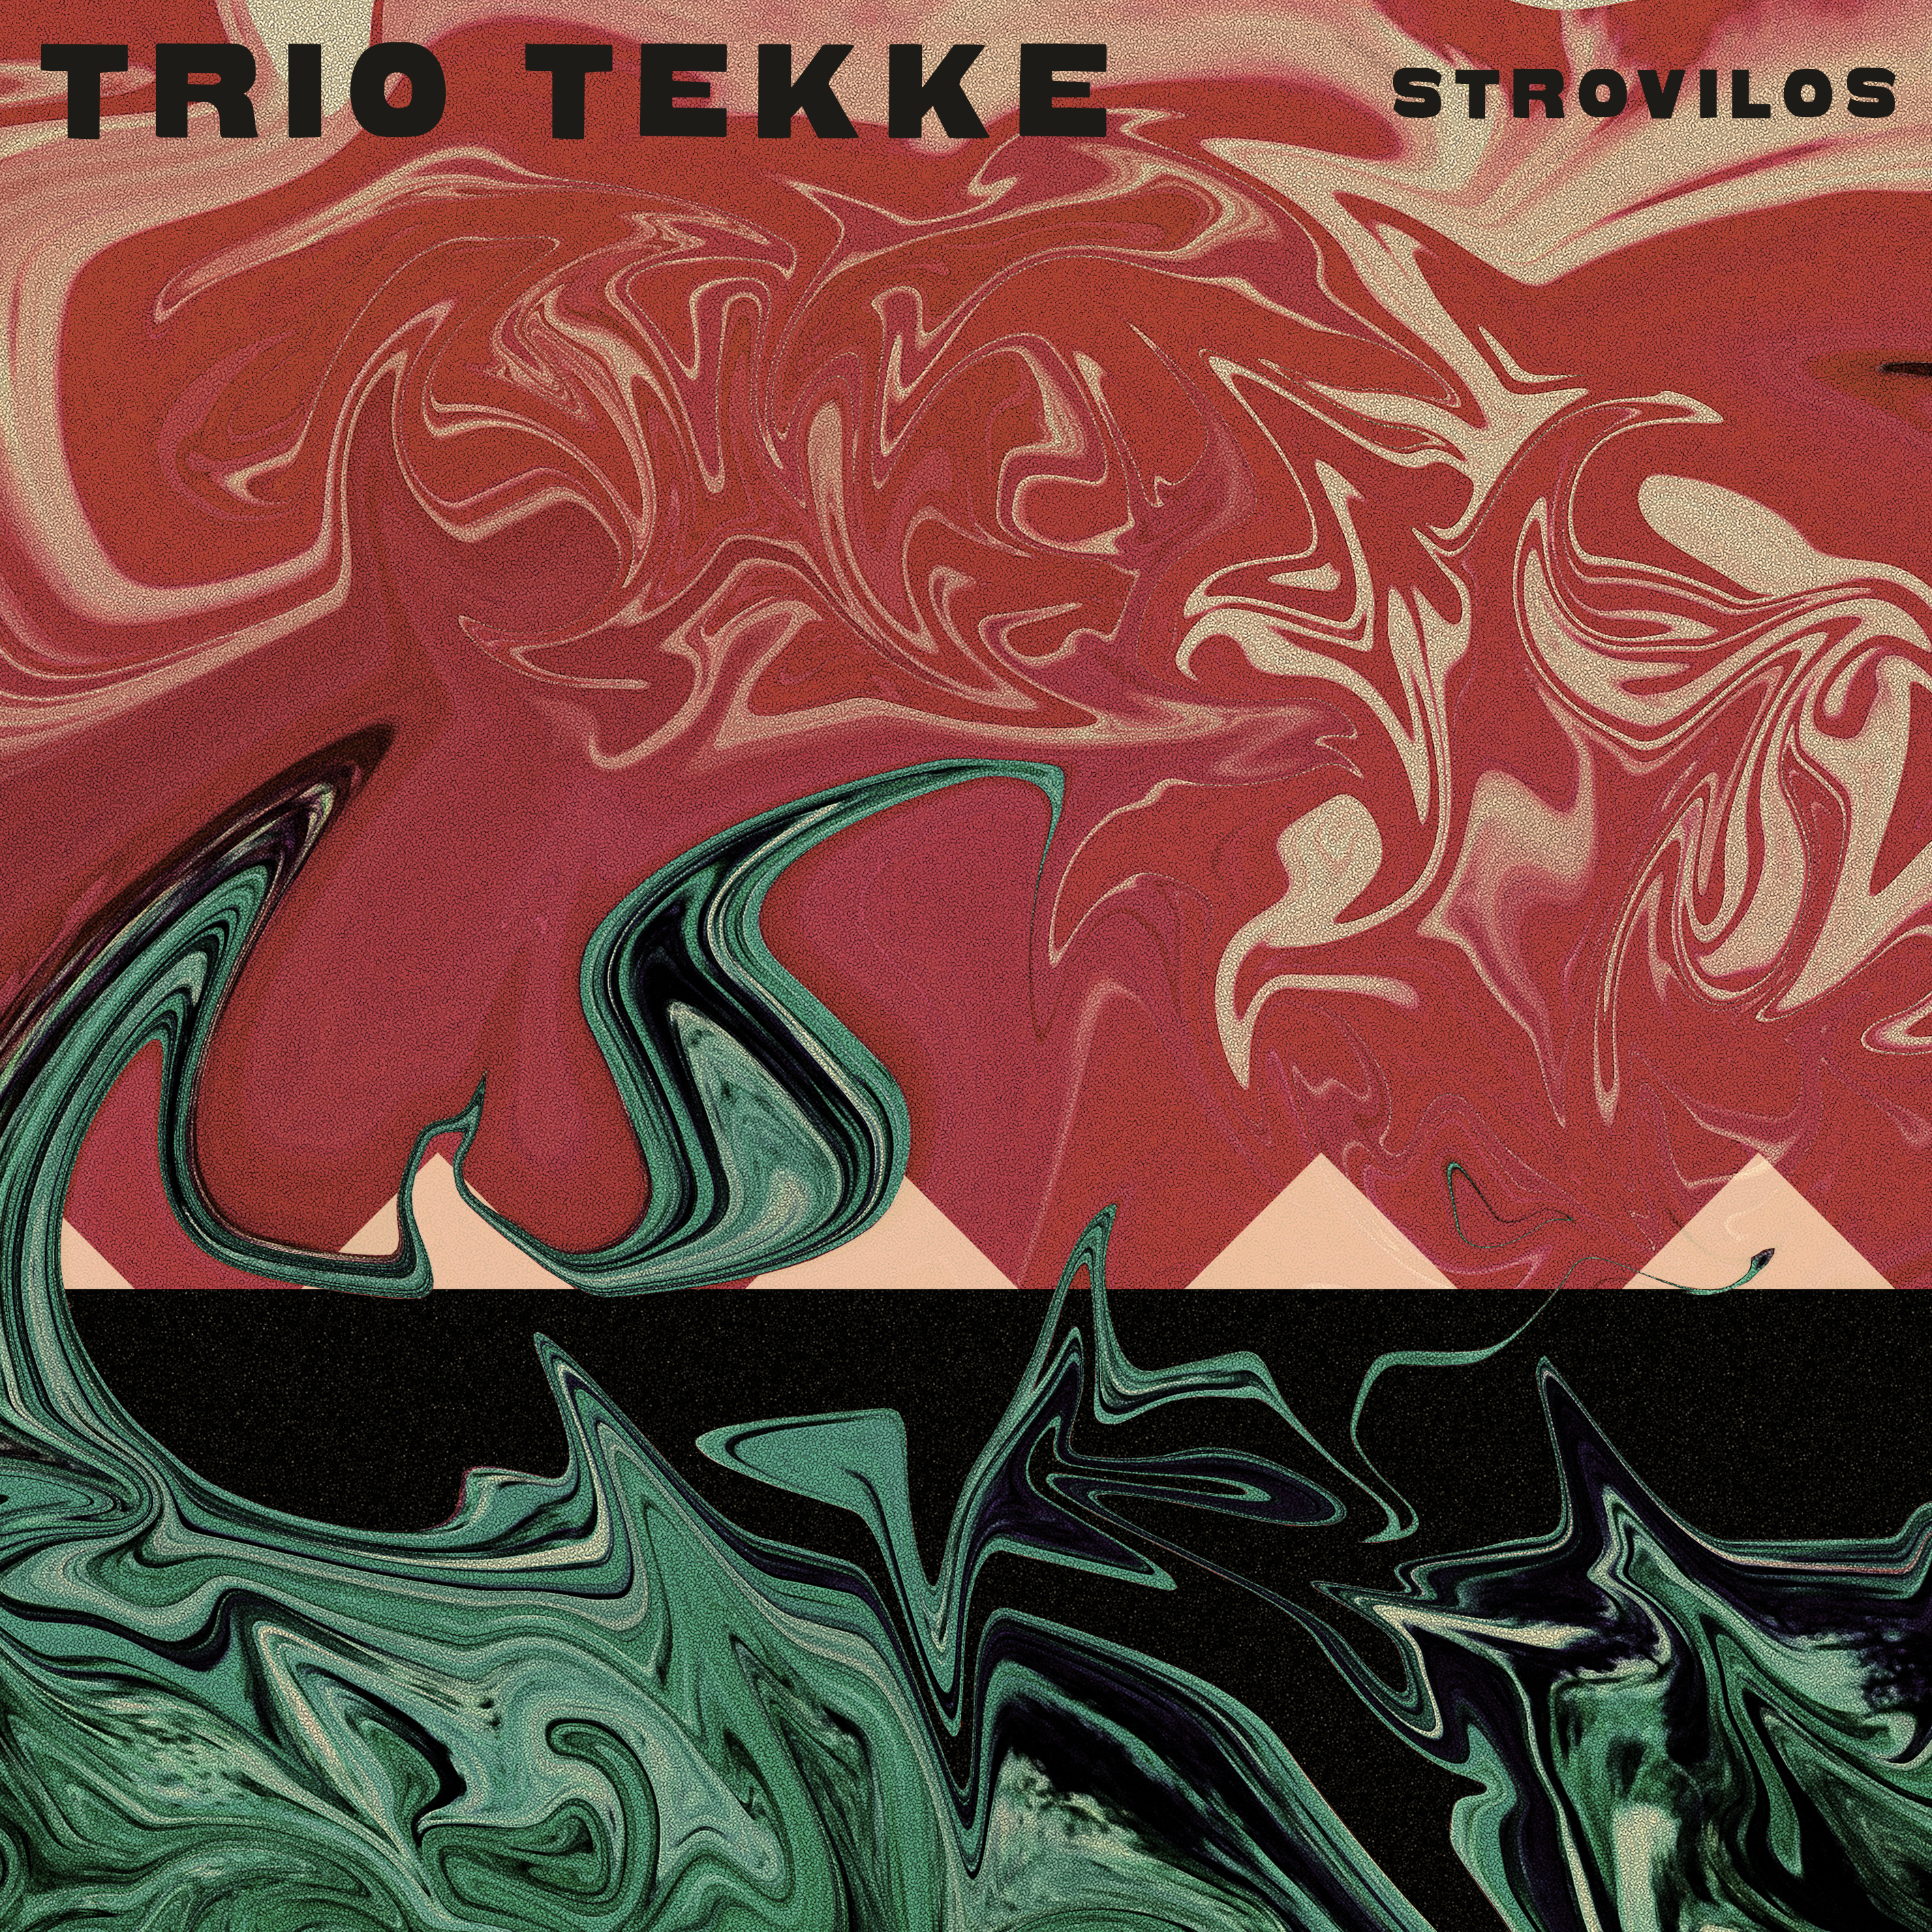 Trio Tekke Zivo 2017